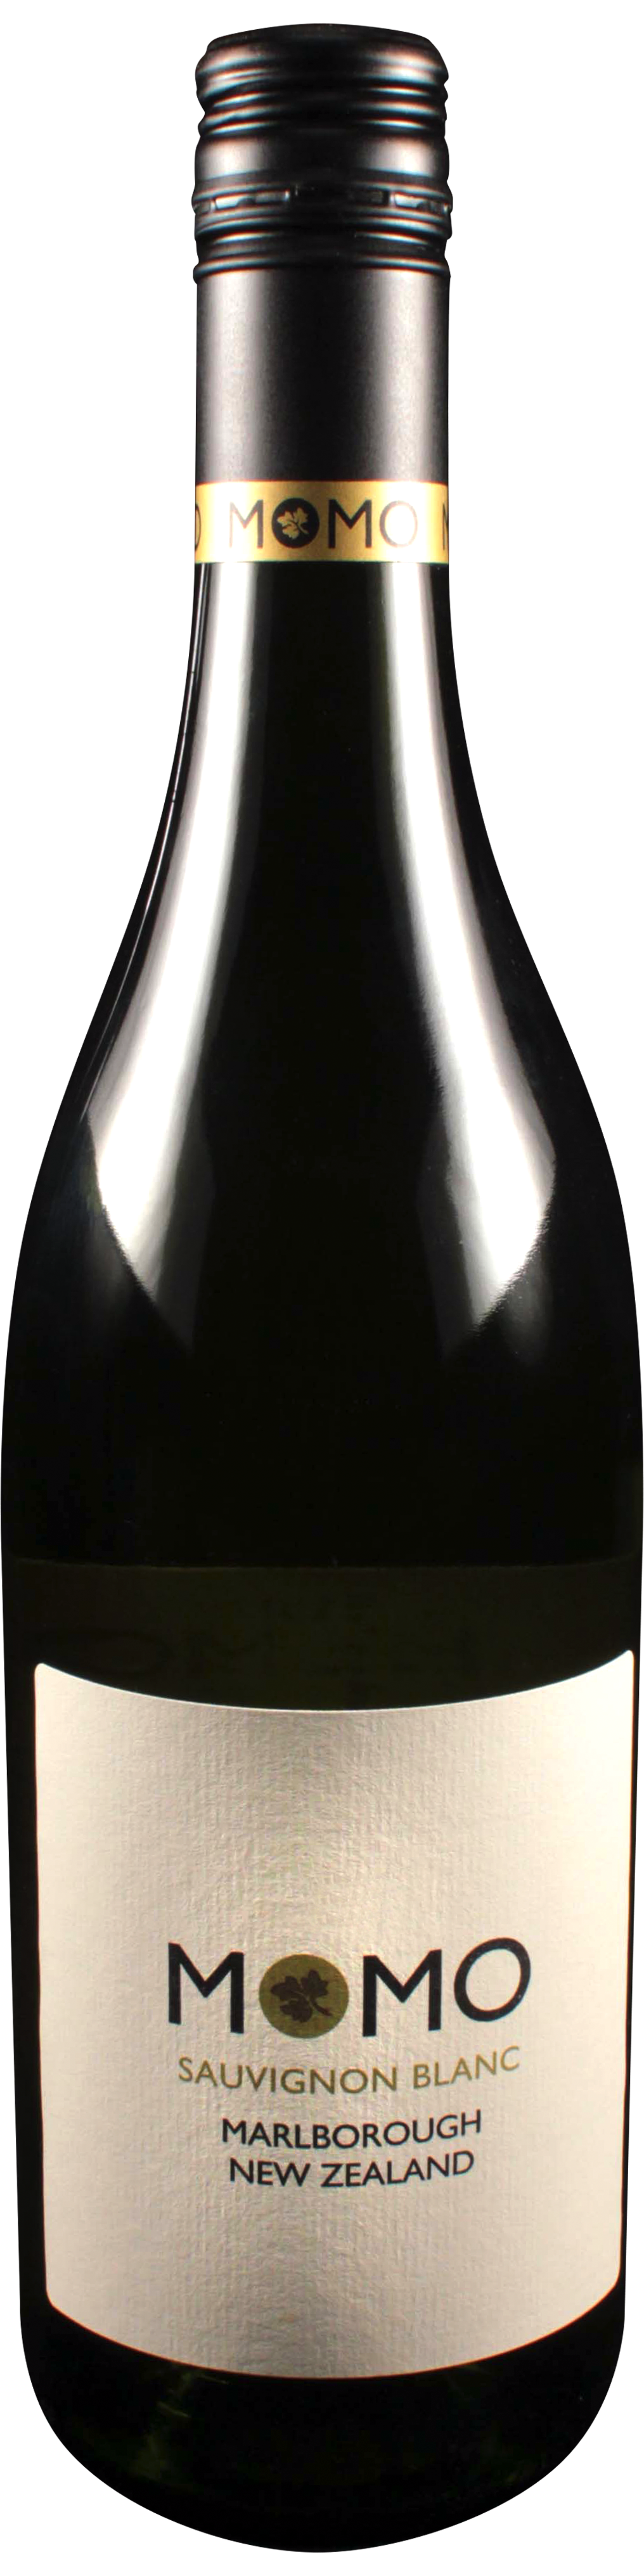 Bottle shot of 2012 Momo Sauvignon Blanc